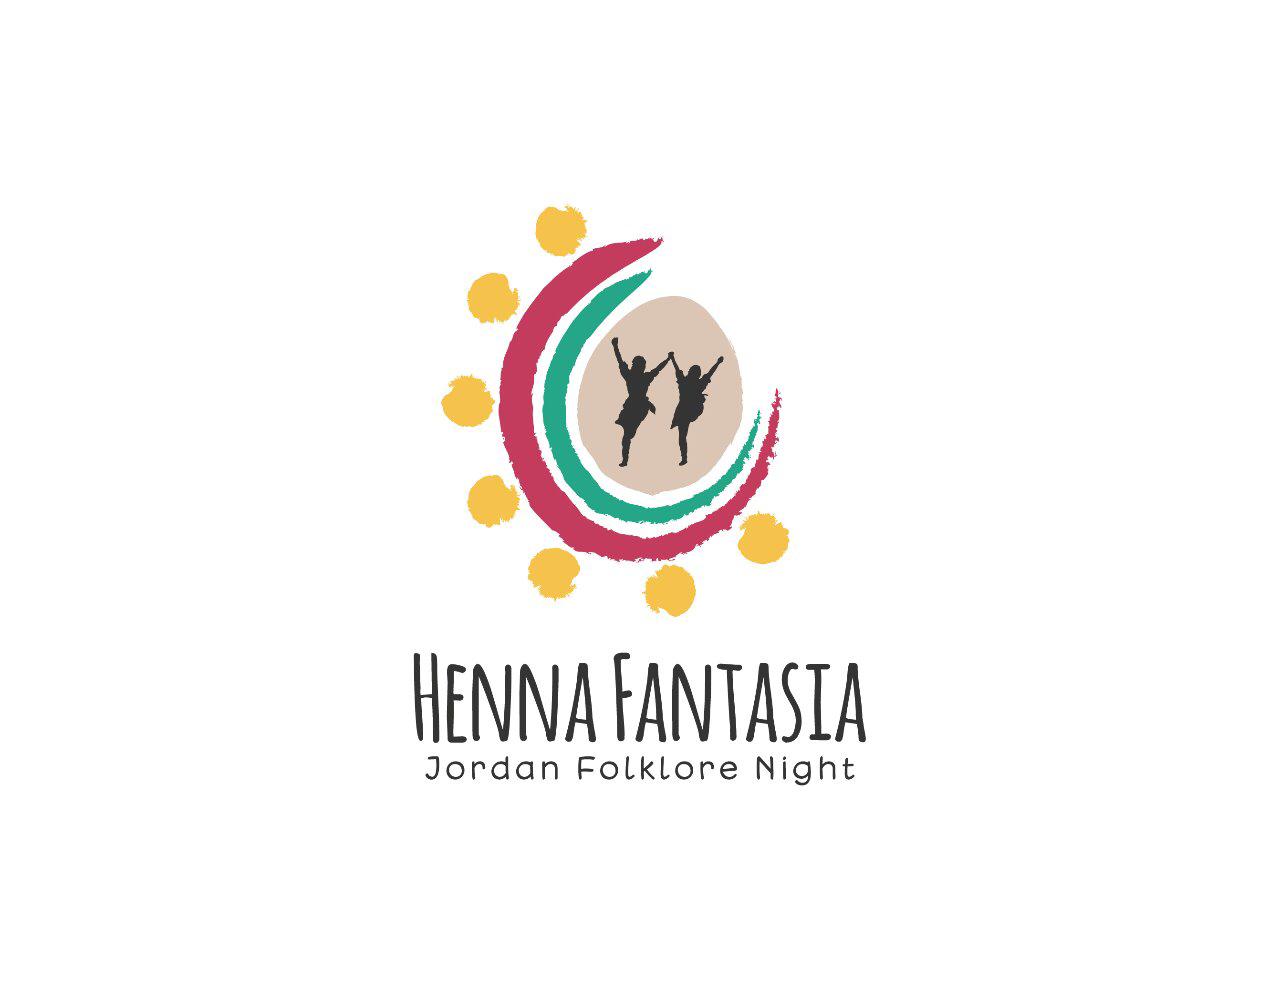 Henna Fantasia - Jordan Folklore Night 